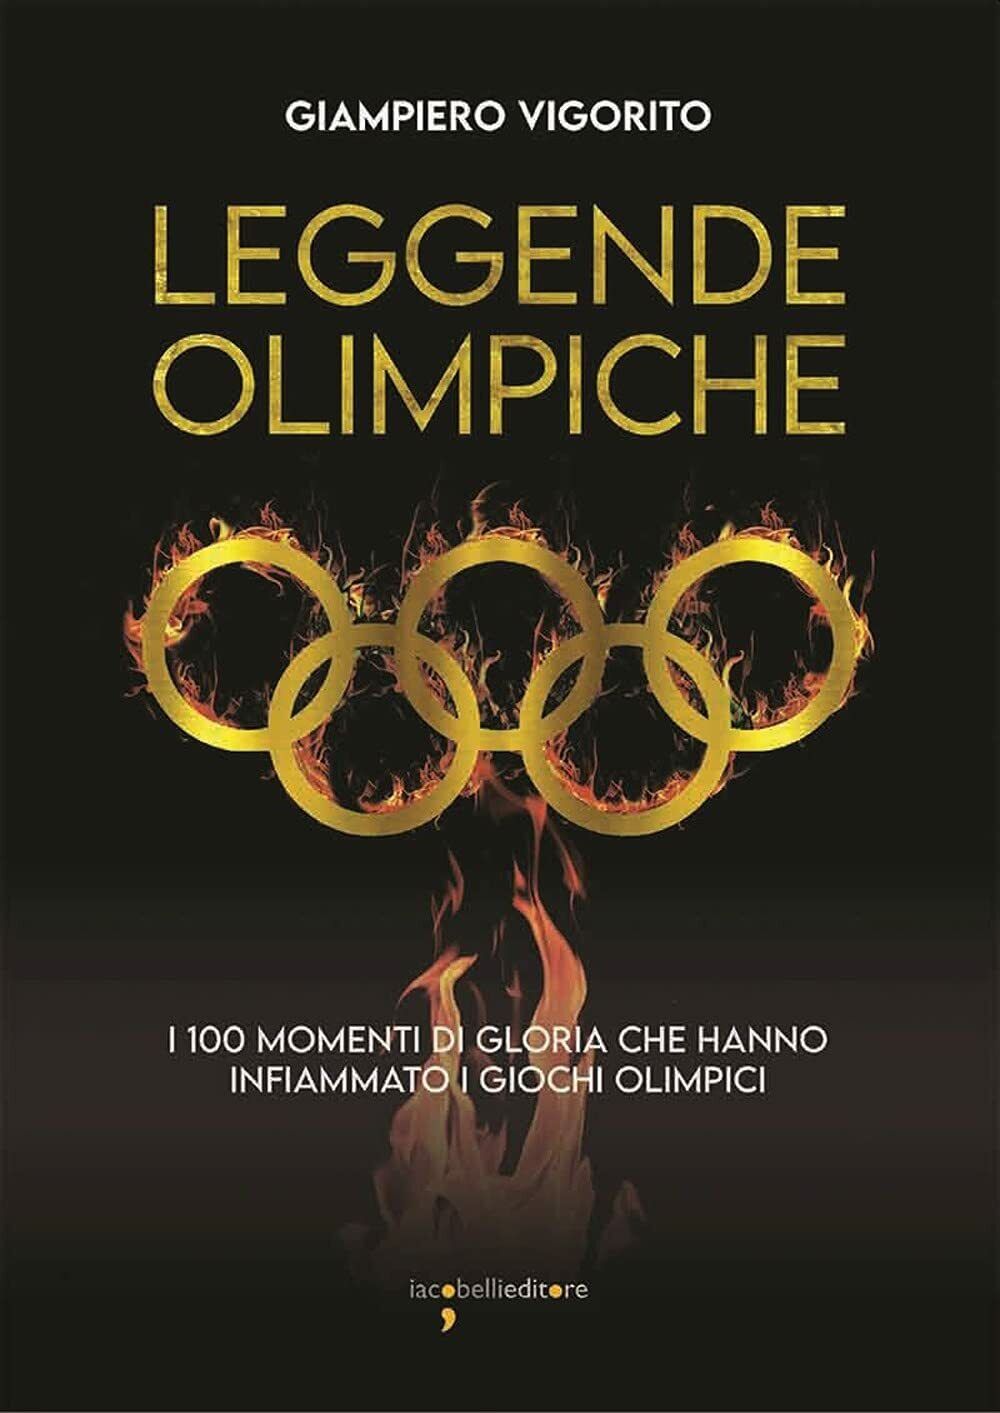 Leggende Olimpiche - Giampiero Vigorito - Iacobellieditore, 2021